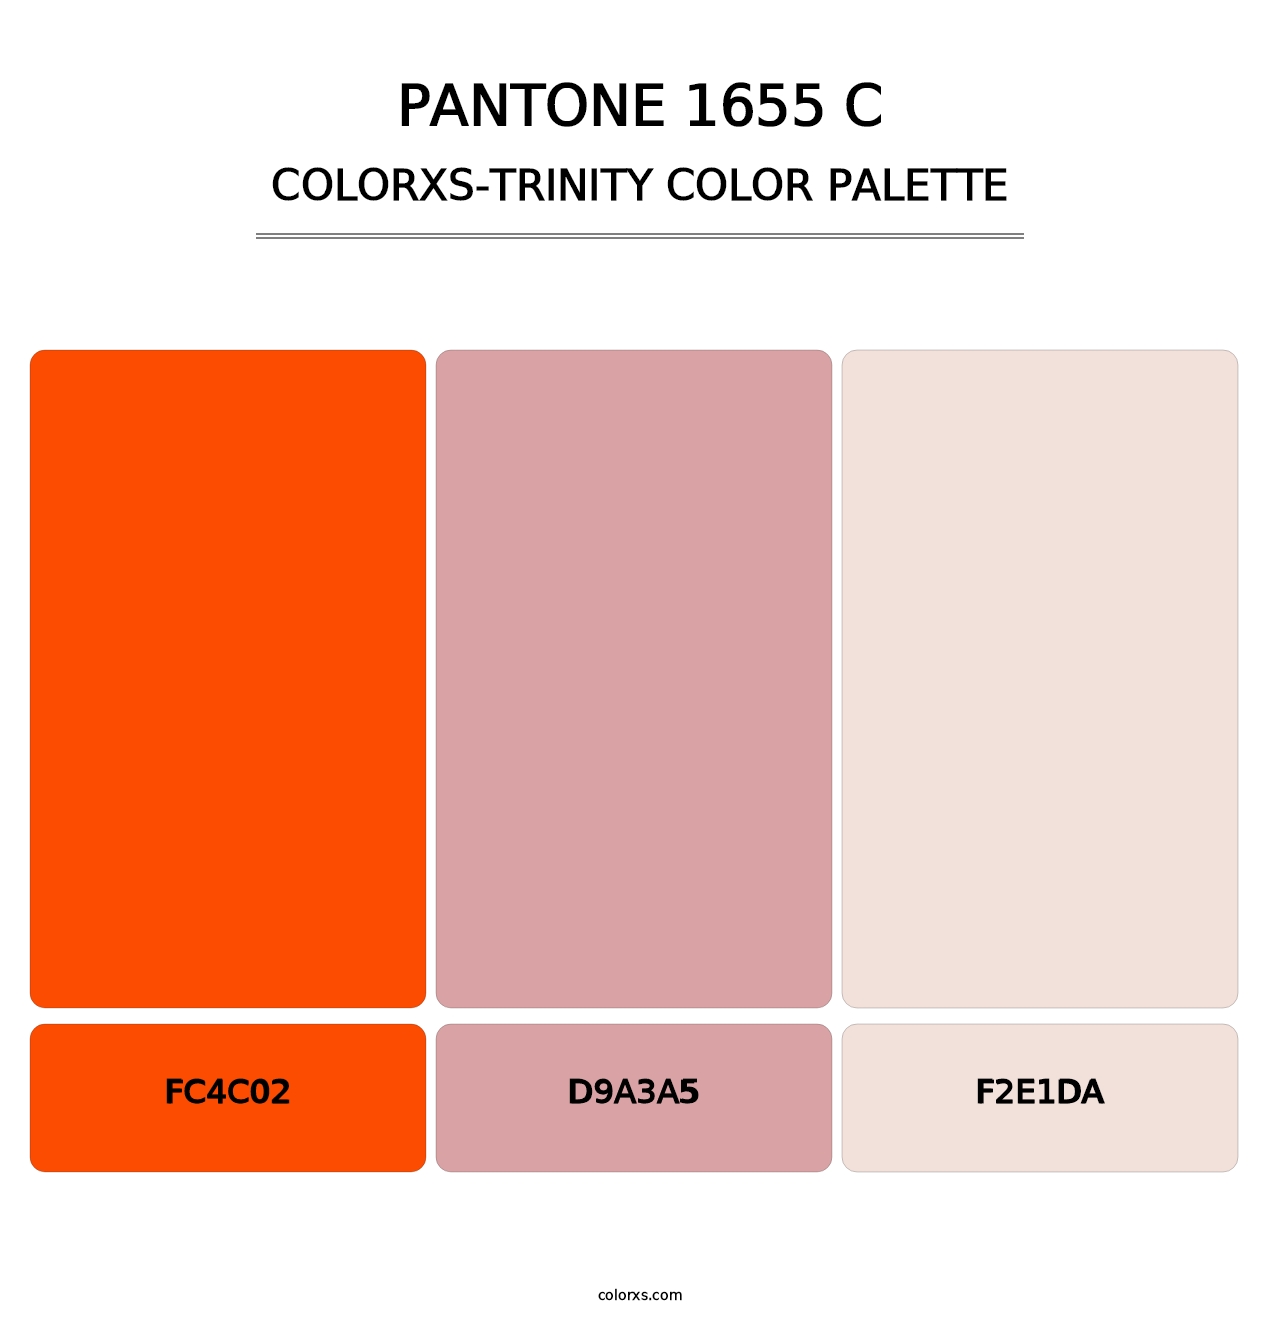 PANTONE 1655 C - Colorxs Trinity Palette